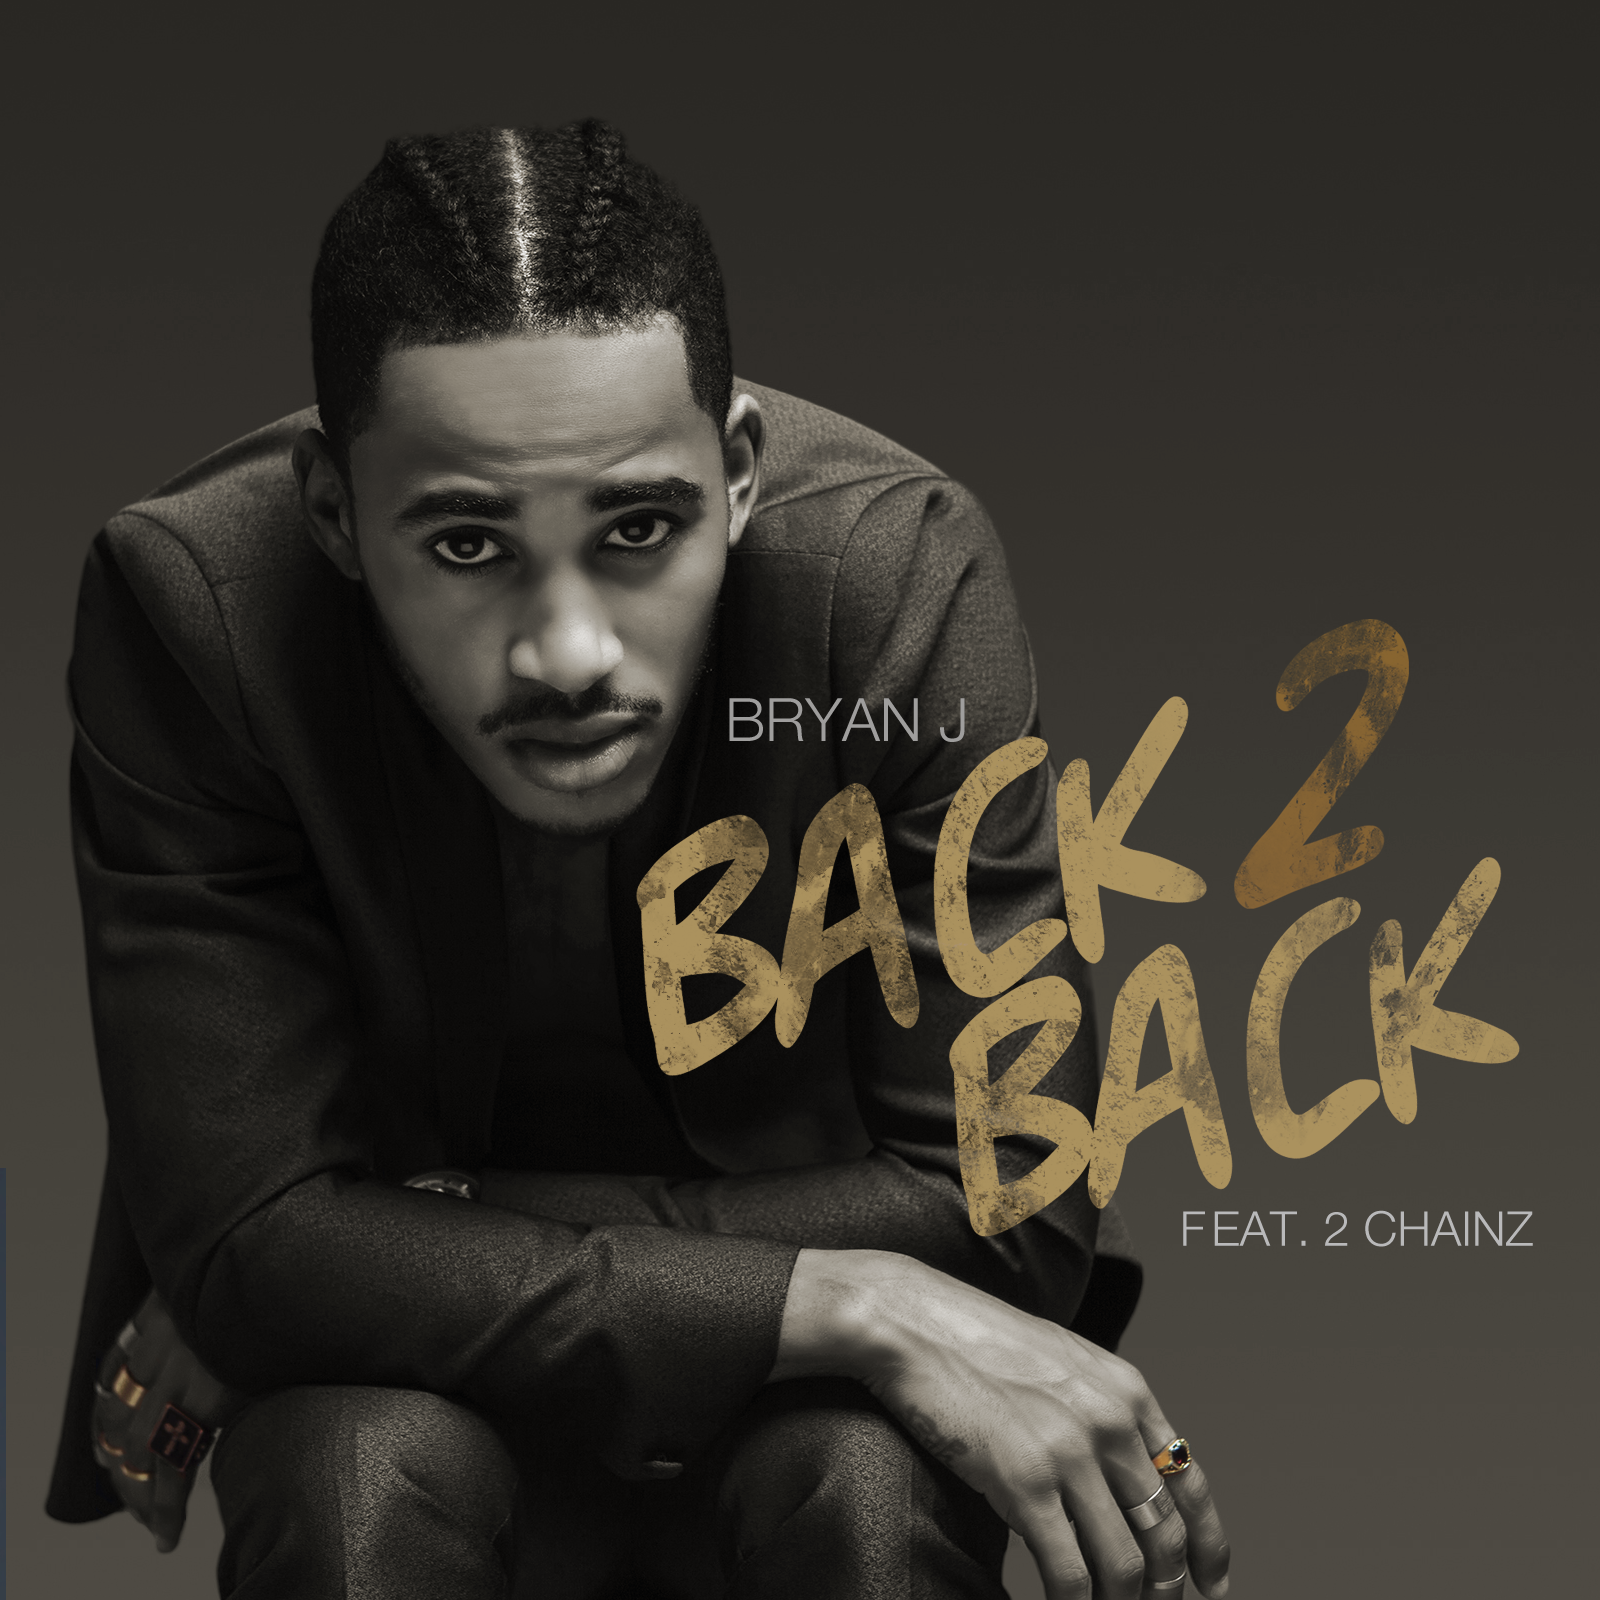 Bryan here. J-feat. Feat back. Песня Брайана. Feat Brian d.